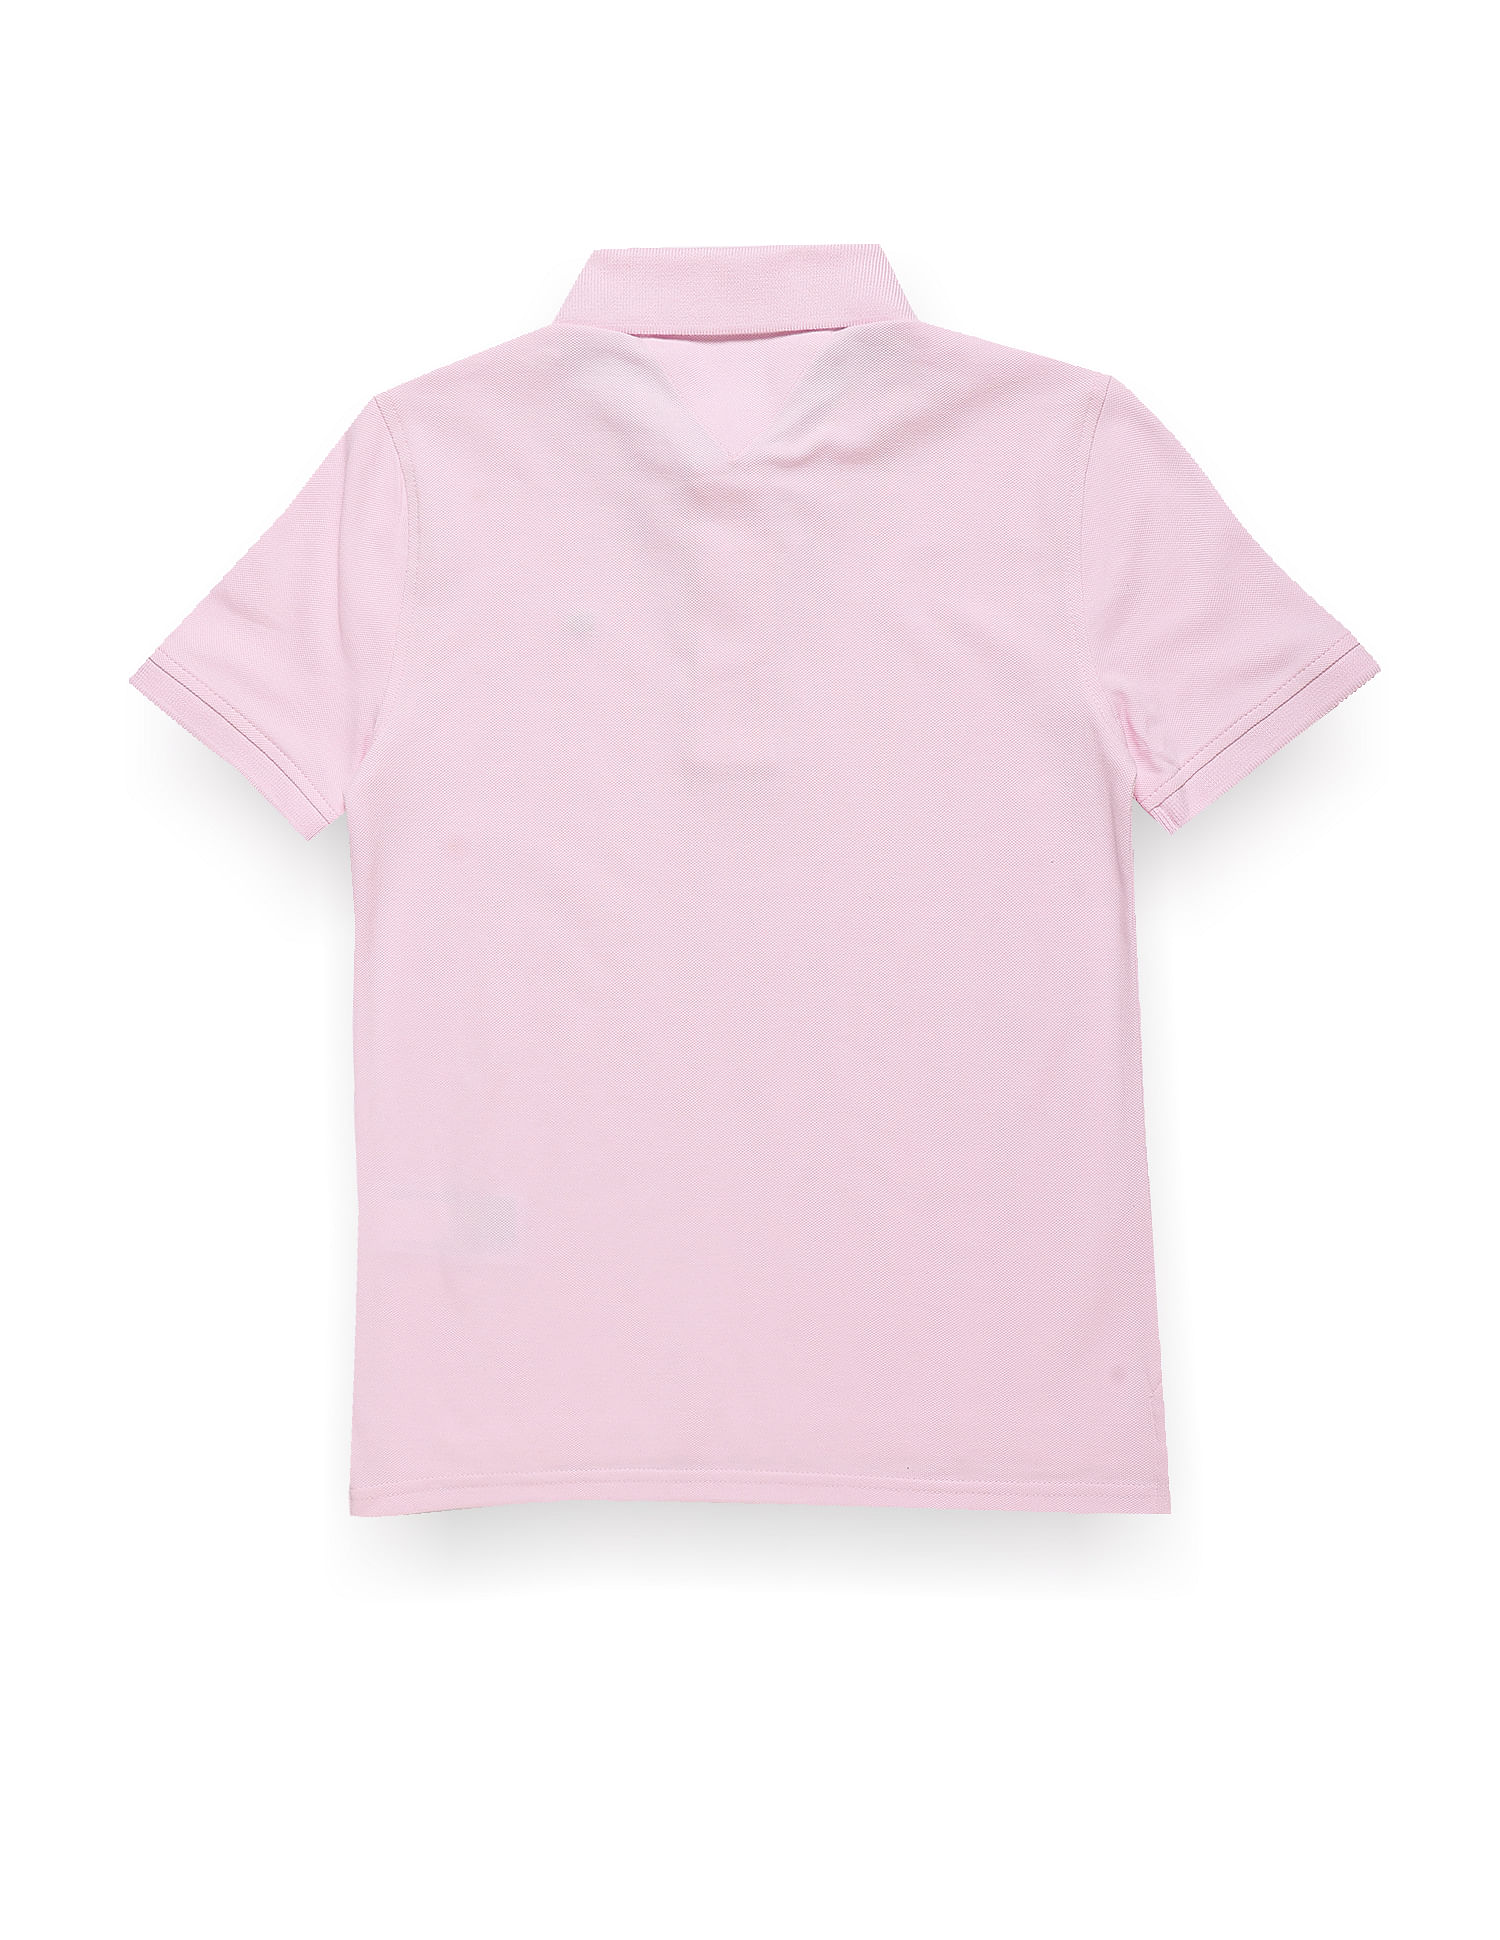 Buy Tommy Hilfiger Kids Boys Solid Stretch Polo Shirt 